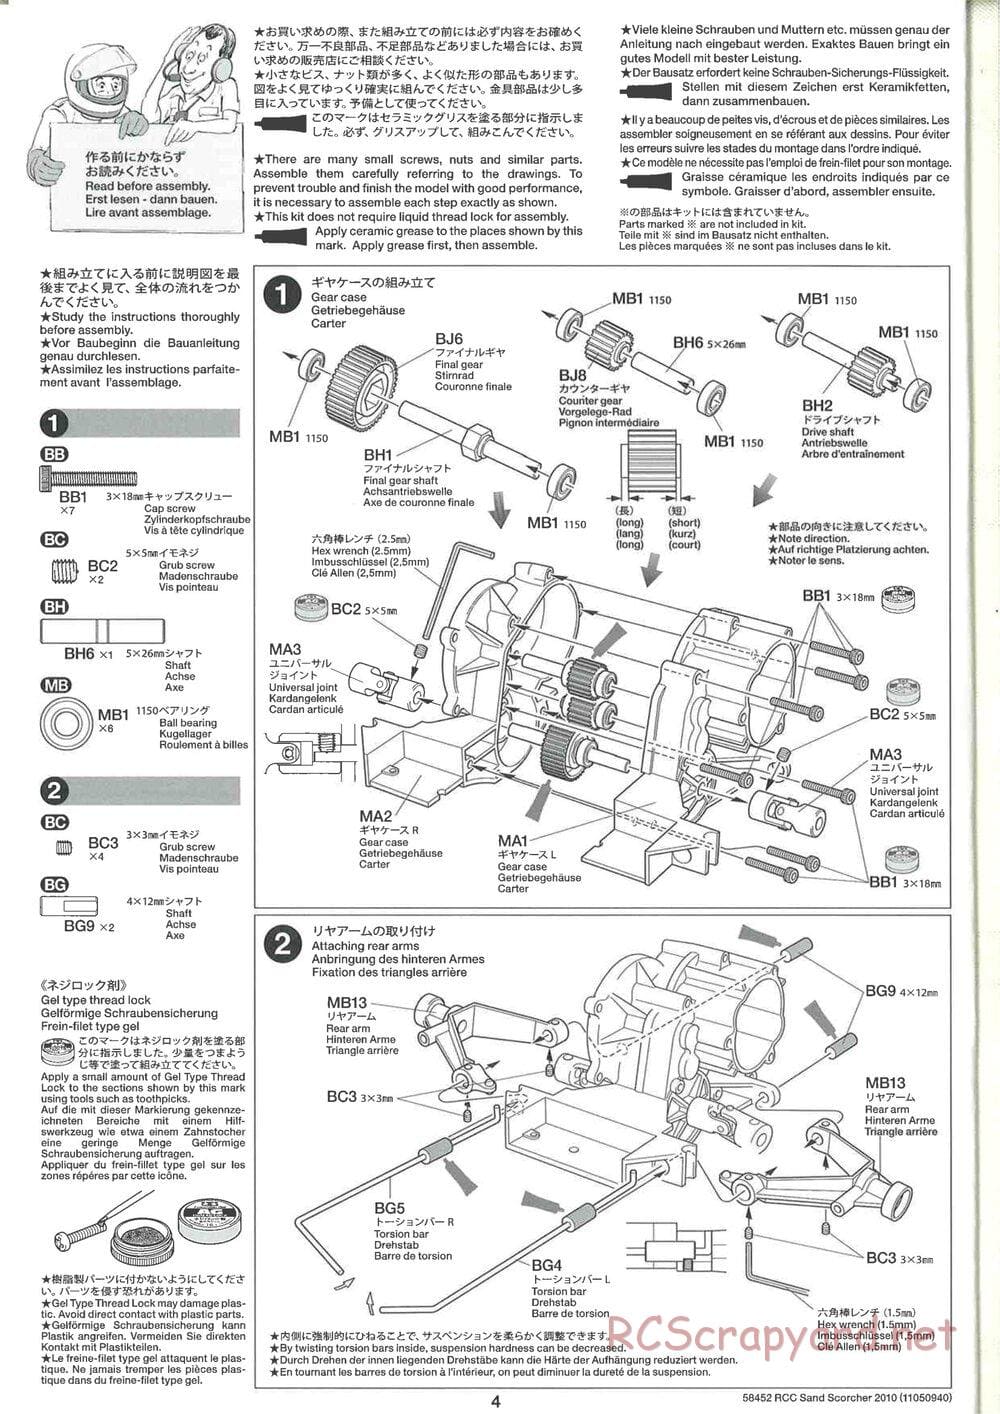 Tamiya - Sand Scorcher 2010 - SRB v1 Chassis - Manual - Page 4